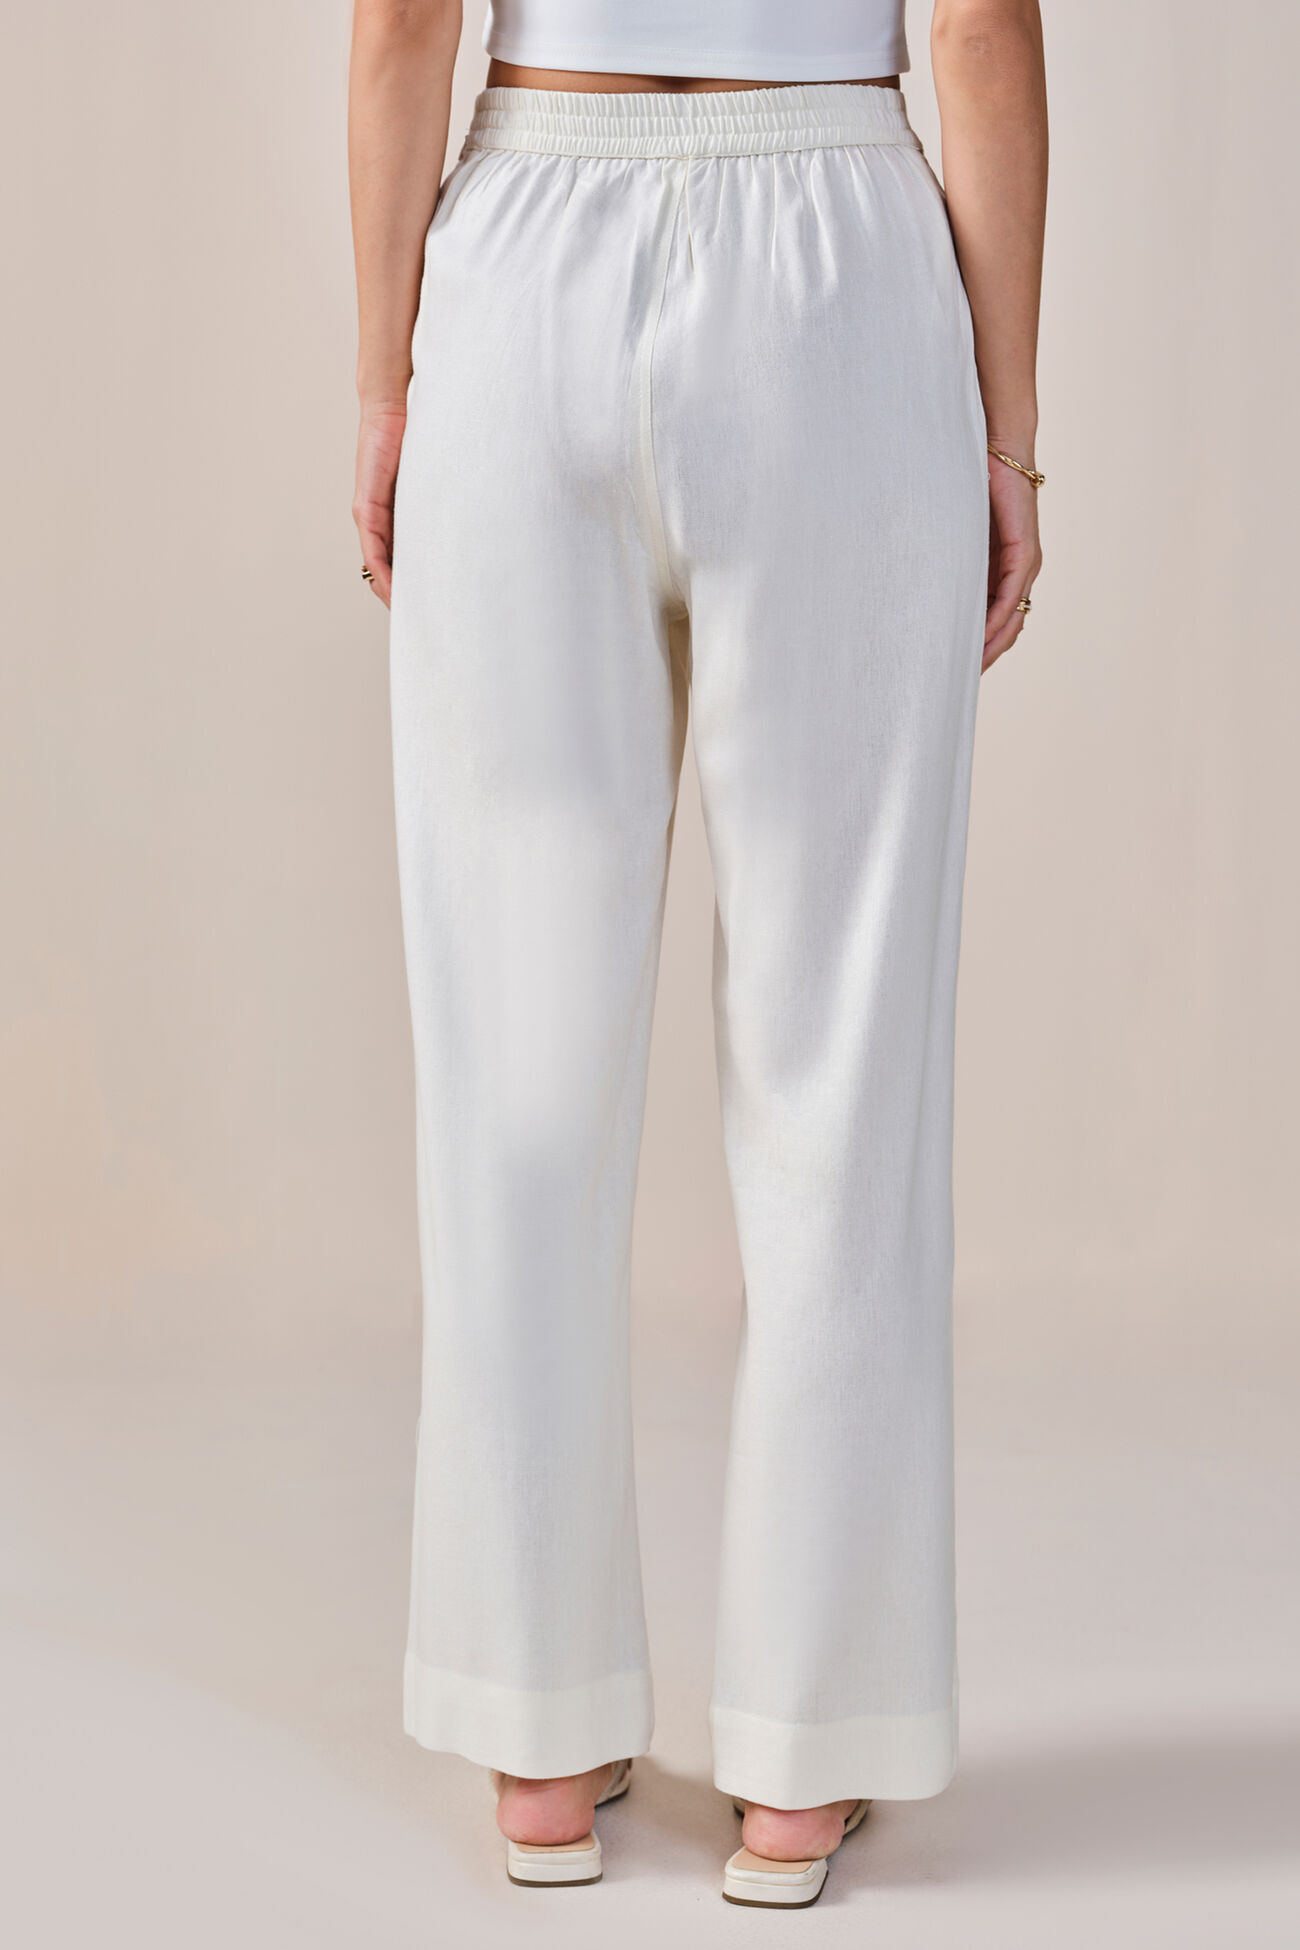 Impression Mode Linen Viscose Blend Trousers, White, image 4